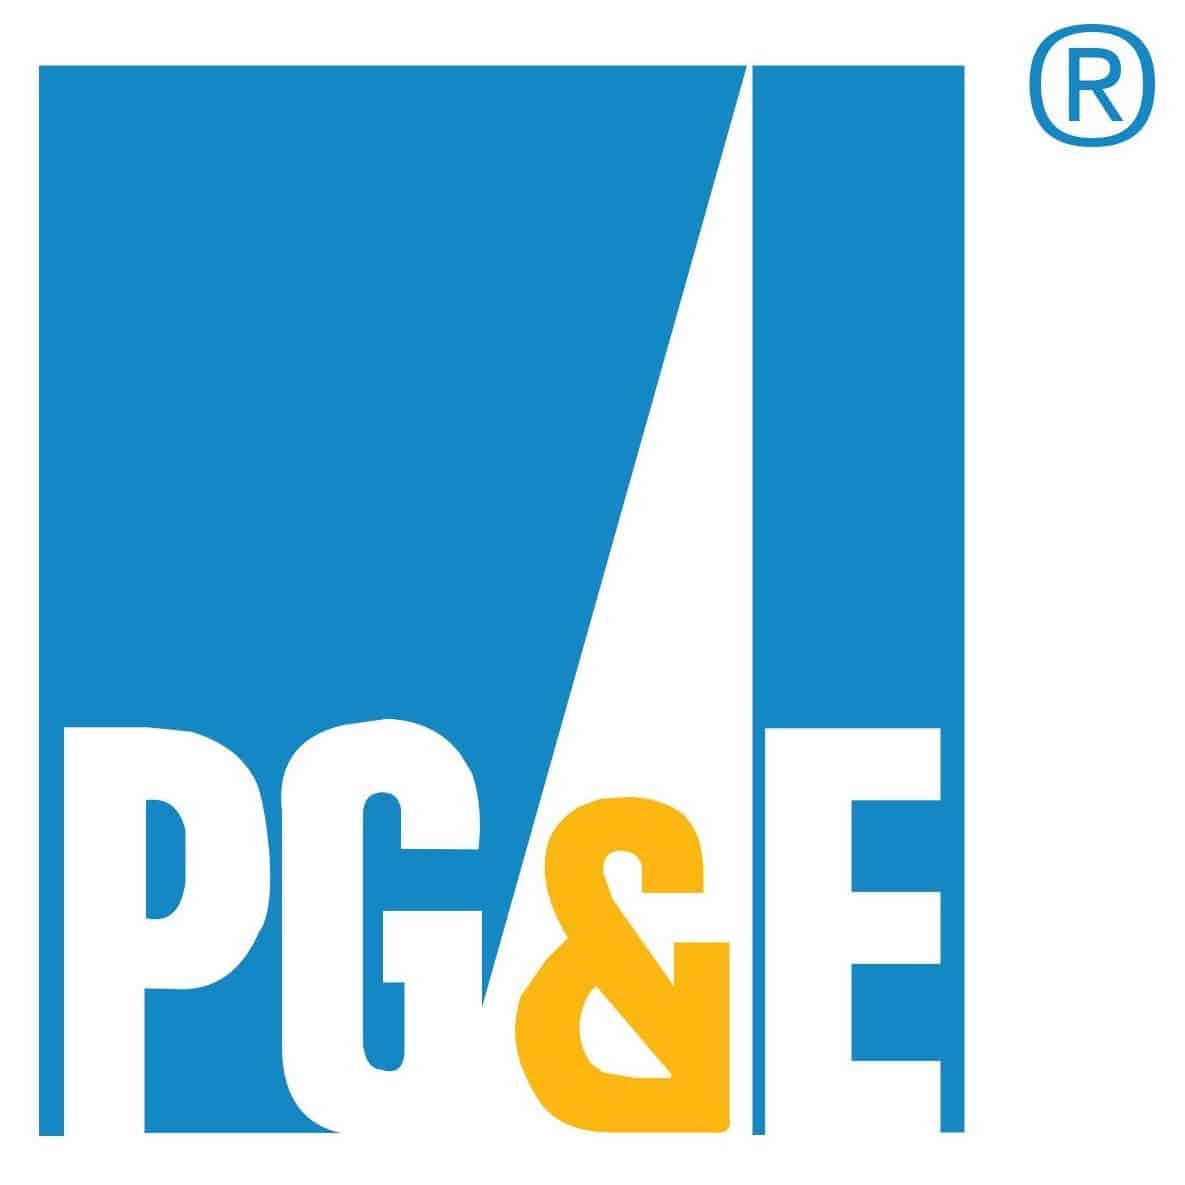 PG E Pacific Gas and Electric Company logo